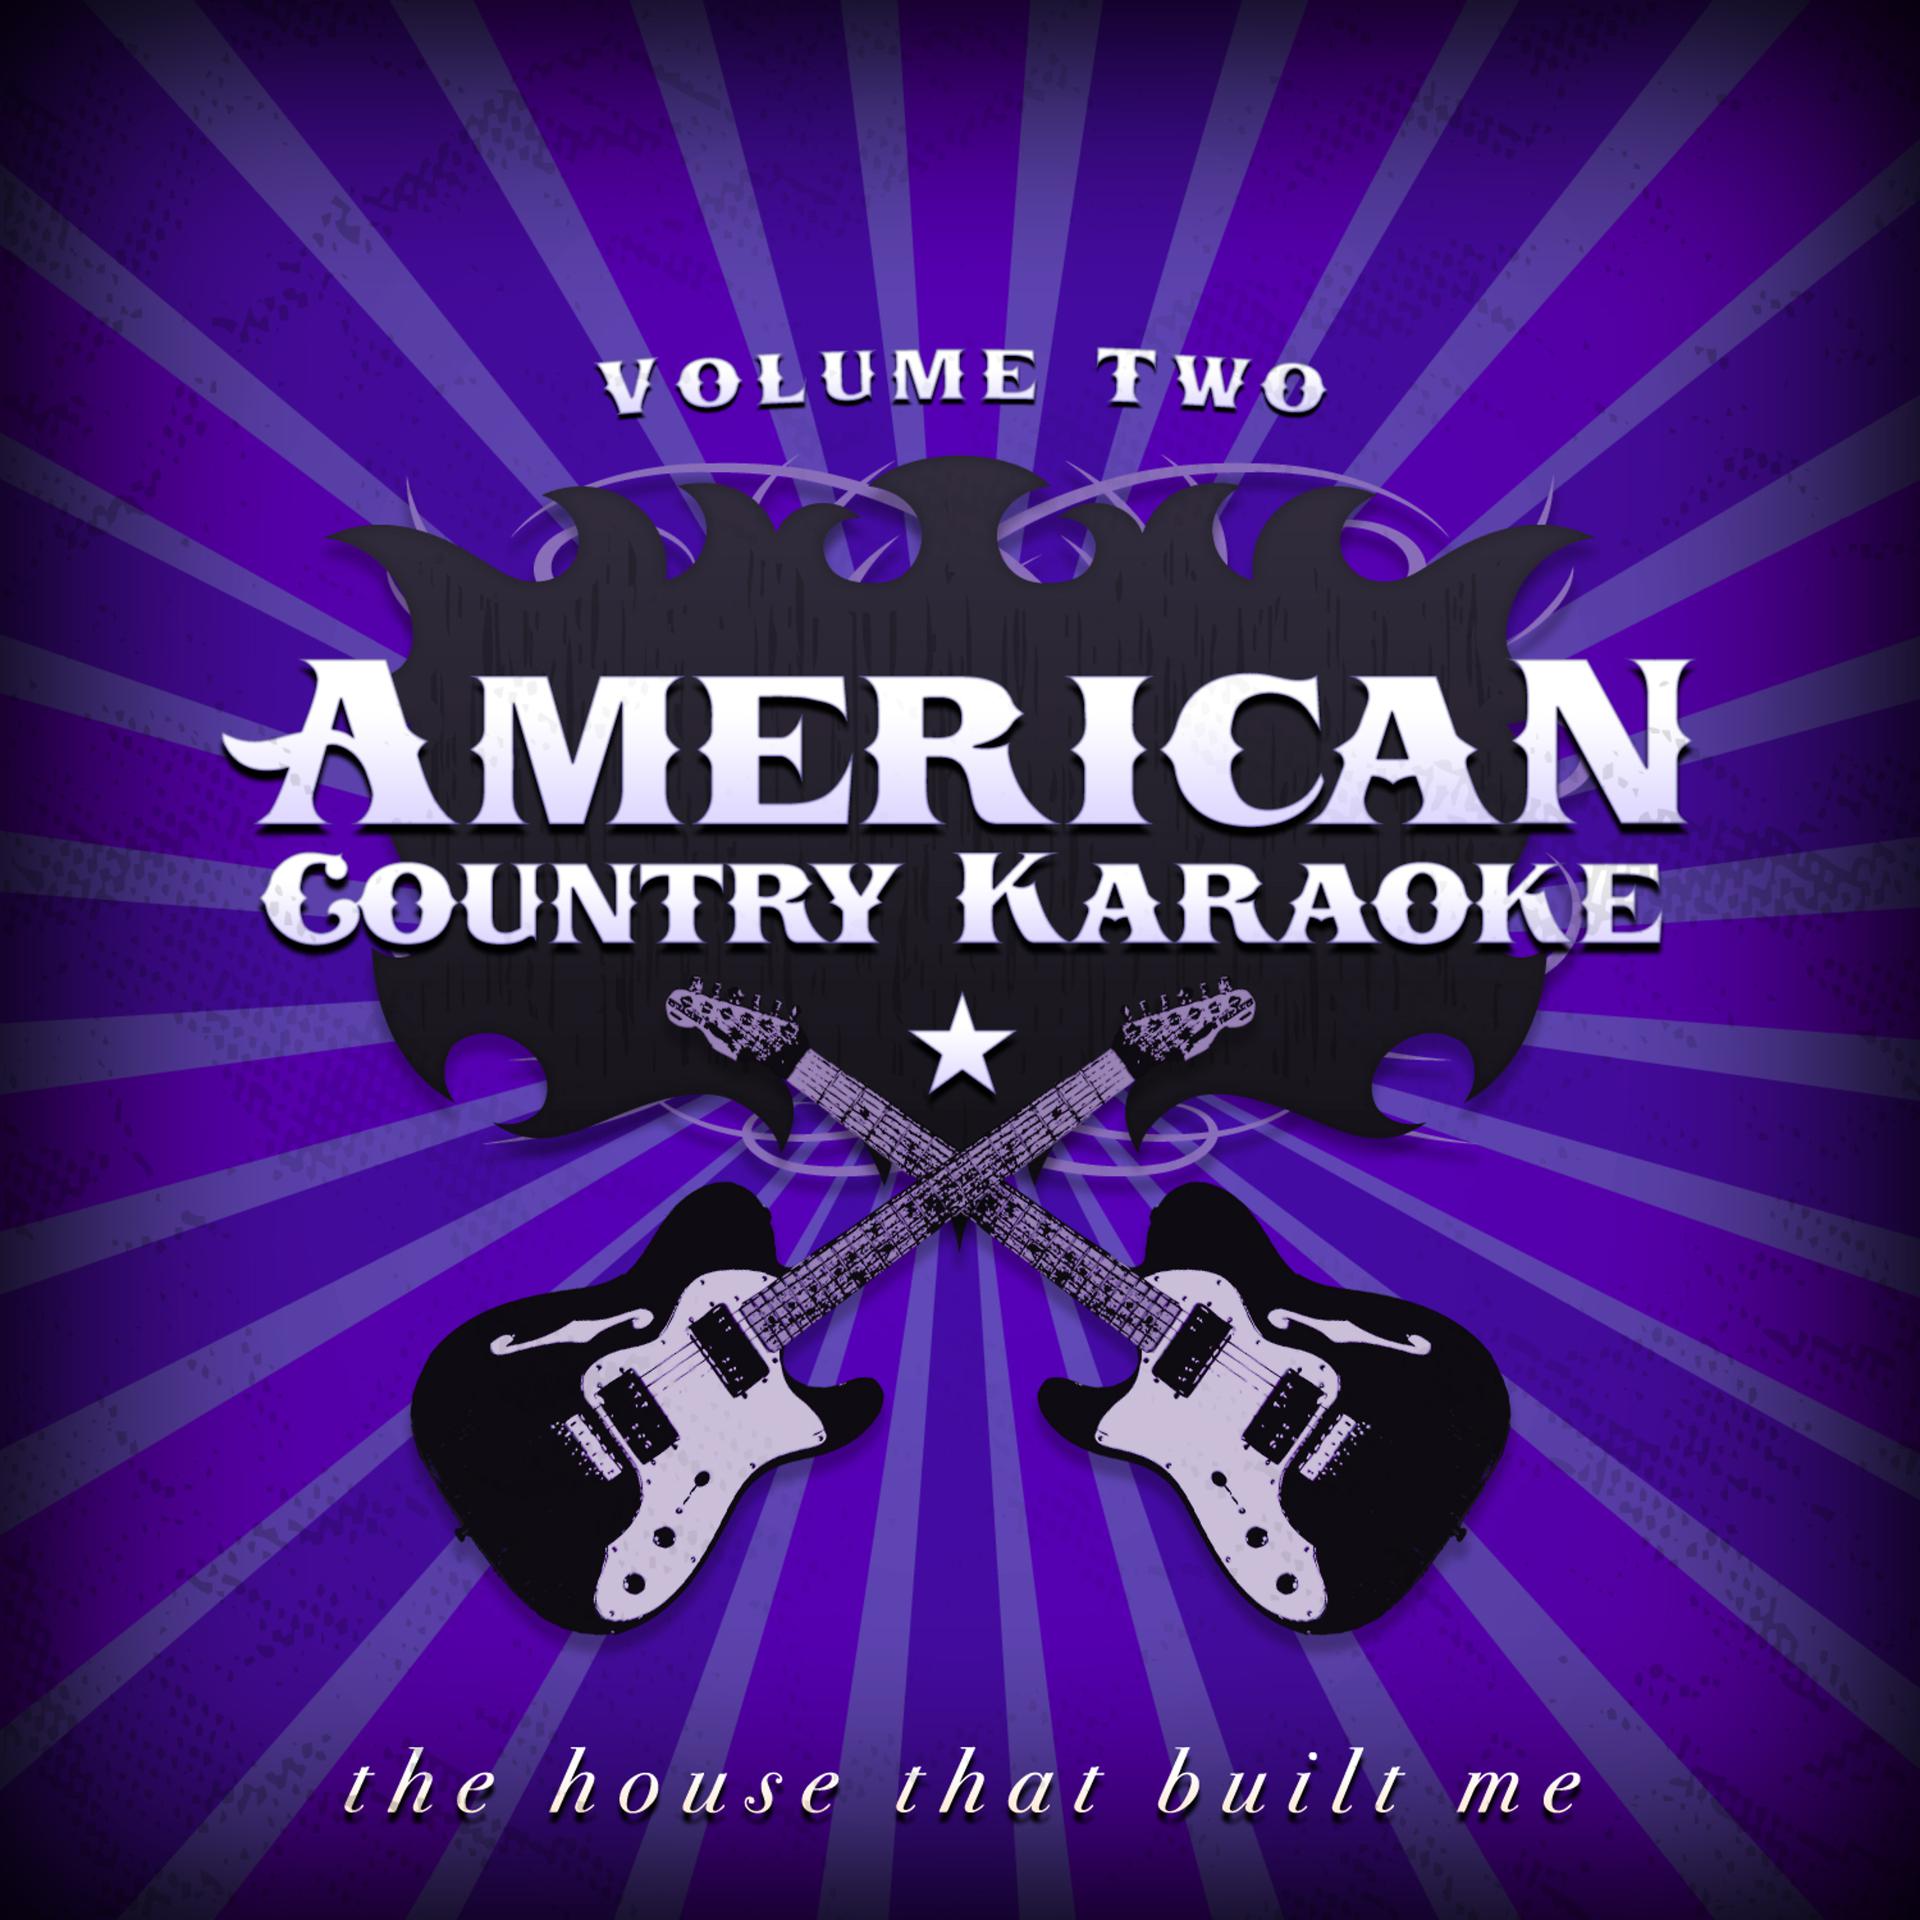 Karaoke like. Караоке. American Hits. Караоке like. Americano песня.